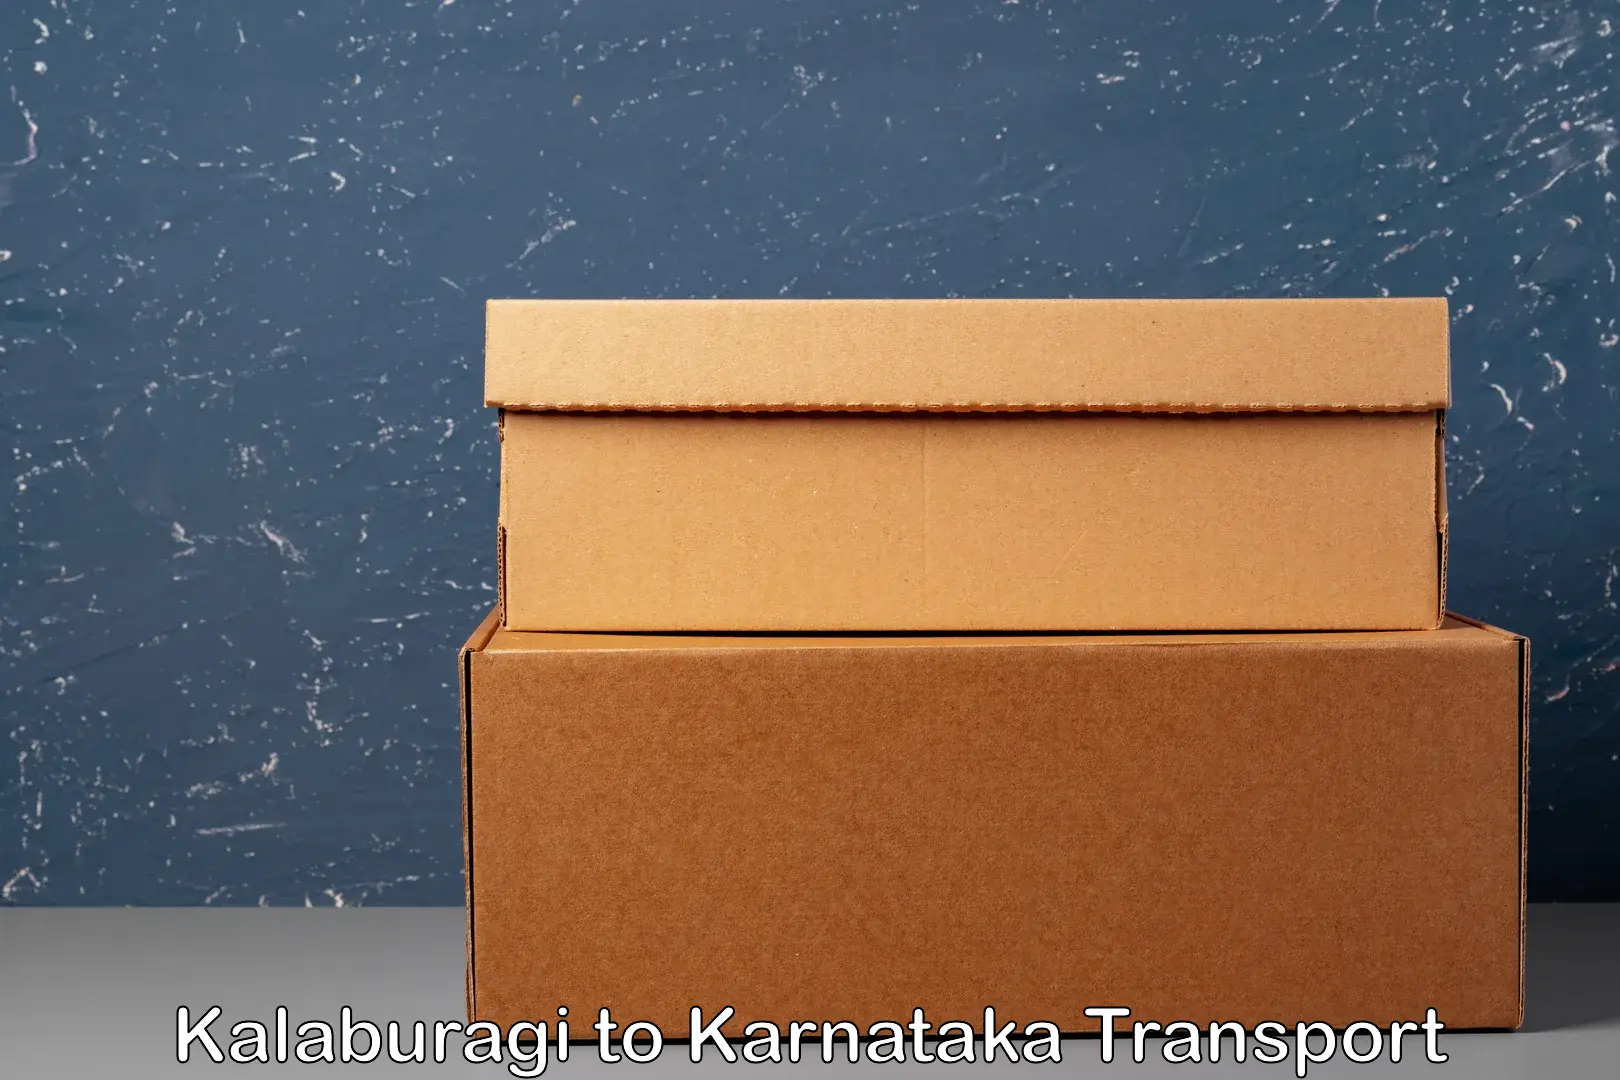 Sending bike to another city Kalaburagi to Karnataka